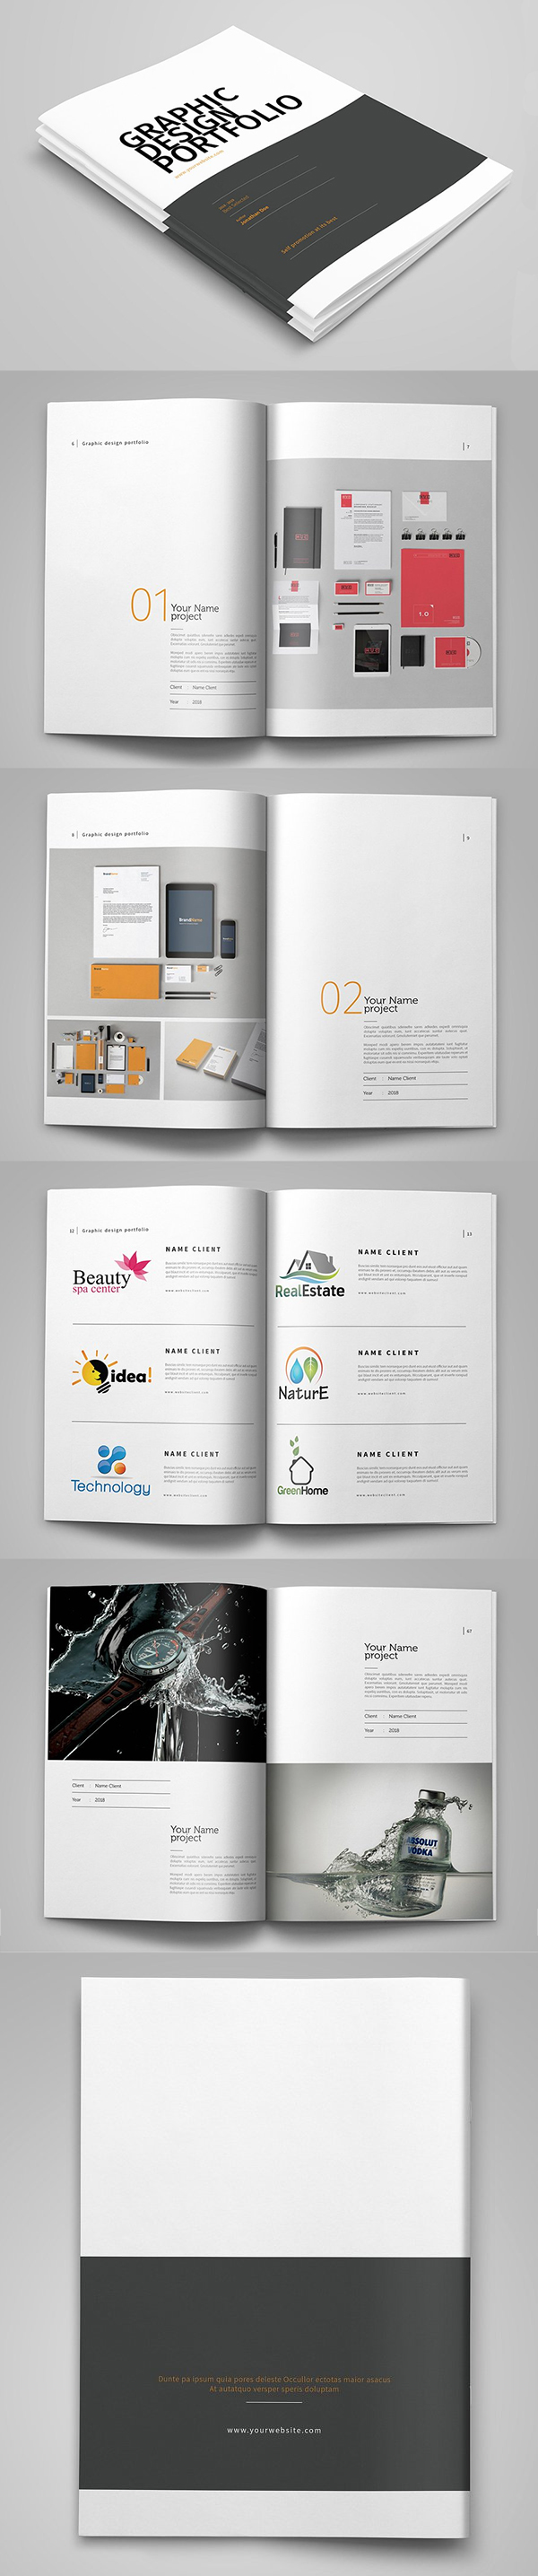 100 Professional Corporate Brochure Templates - 62